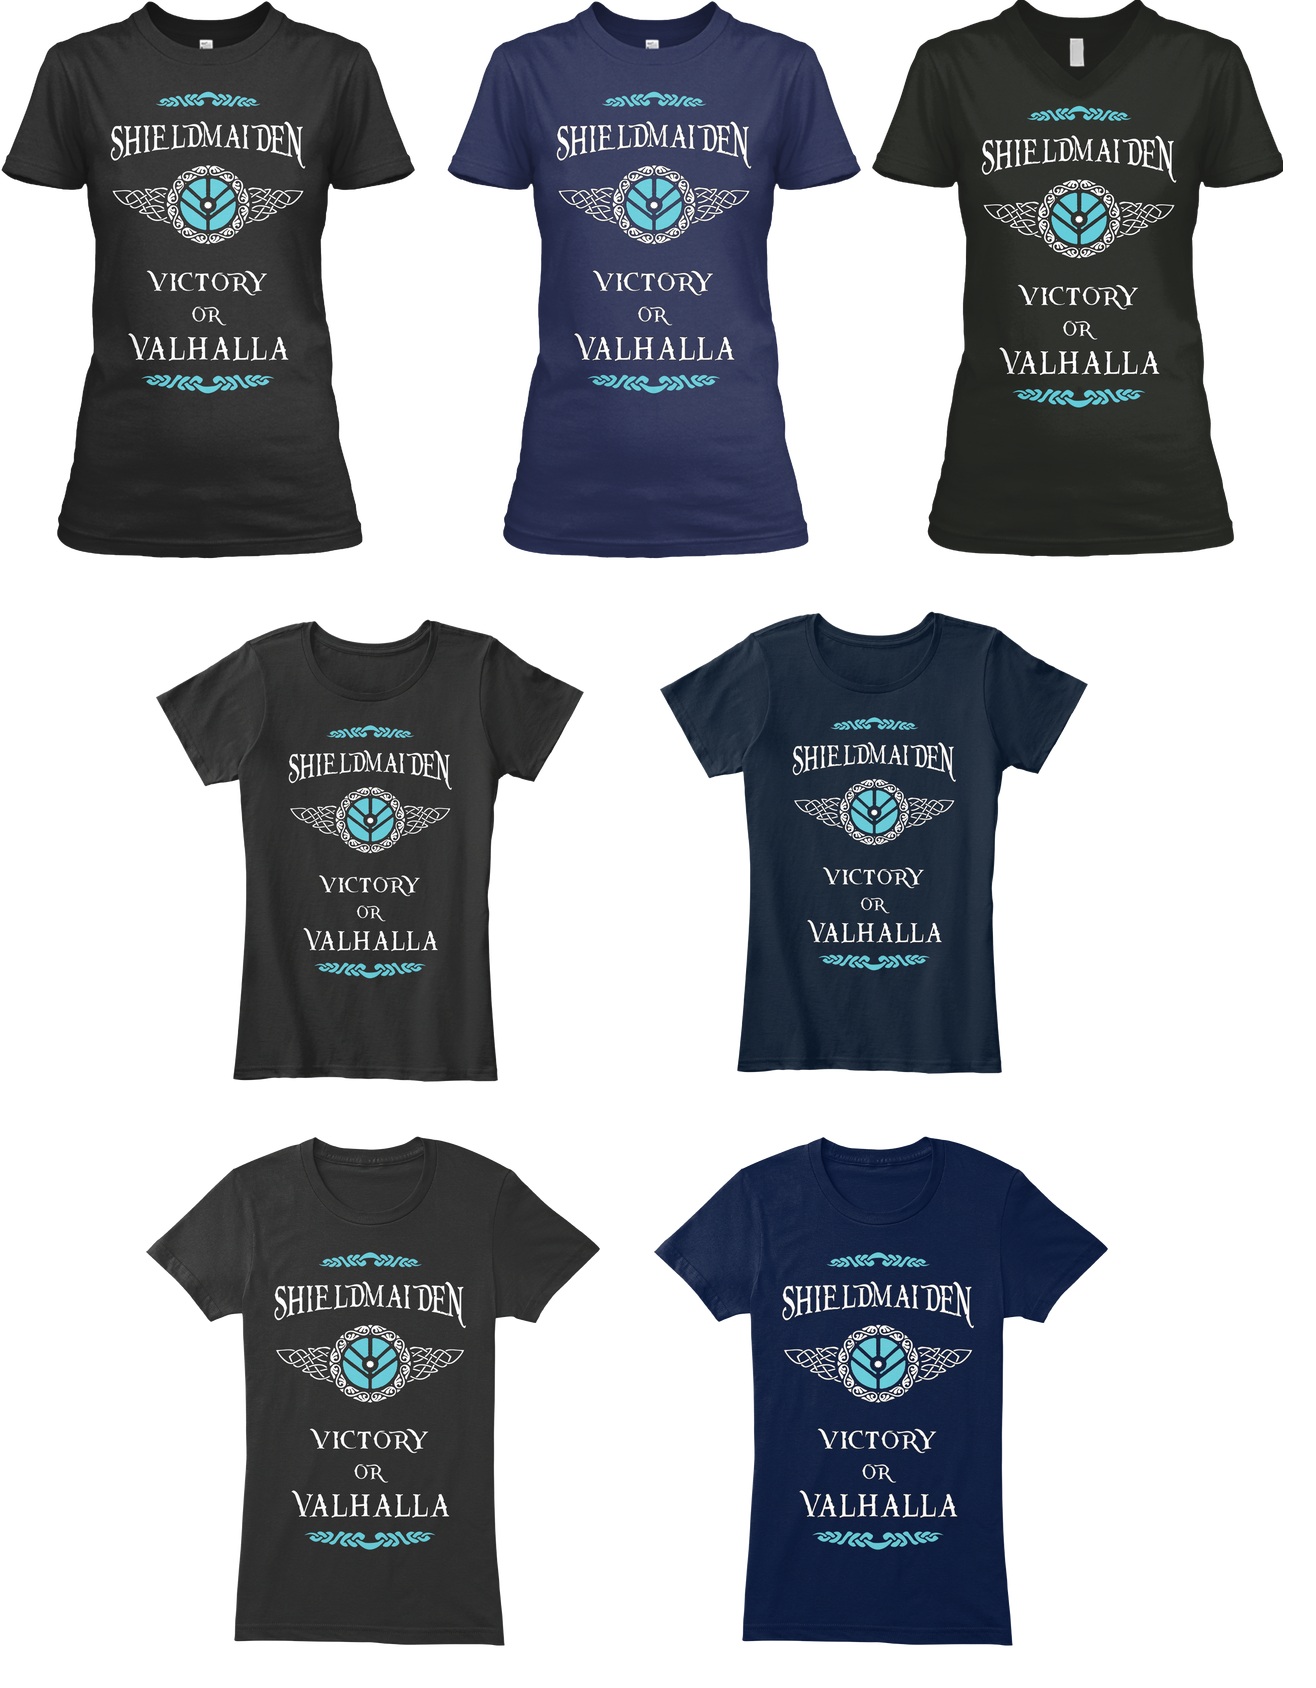 Shieldmaiden Lagertha T-Shirts, Hoodies and Tank Tops (Vikings)